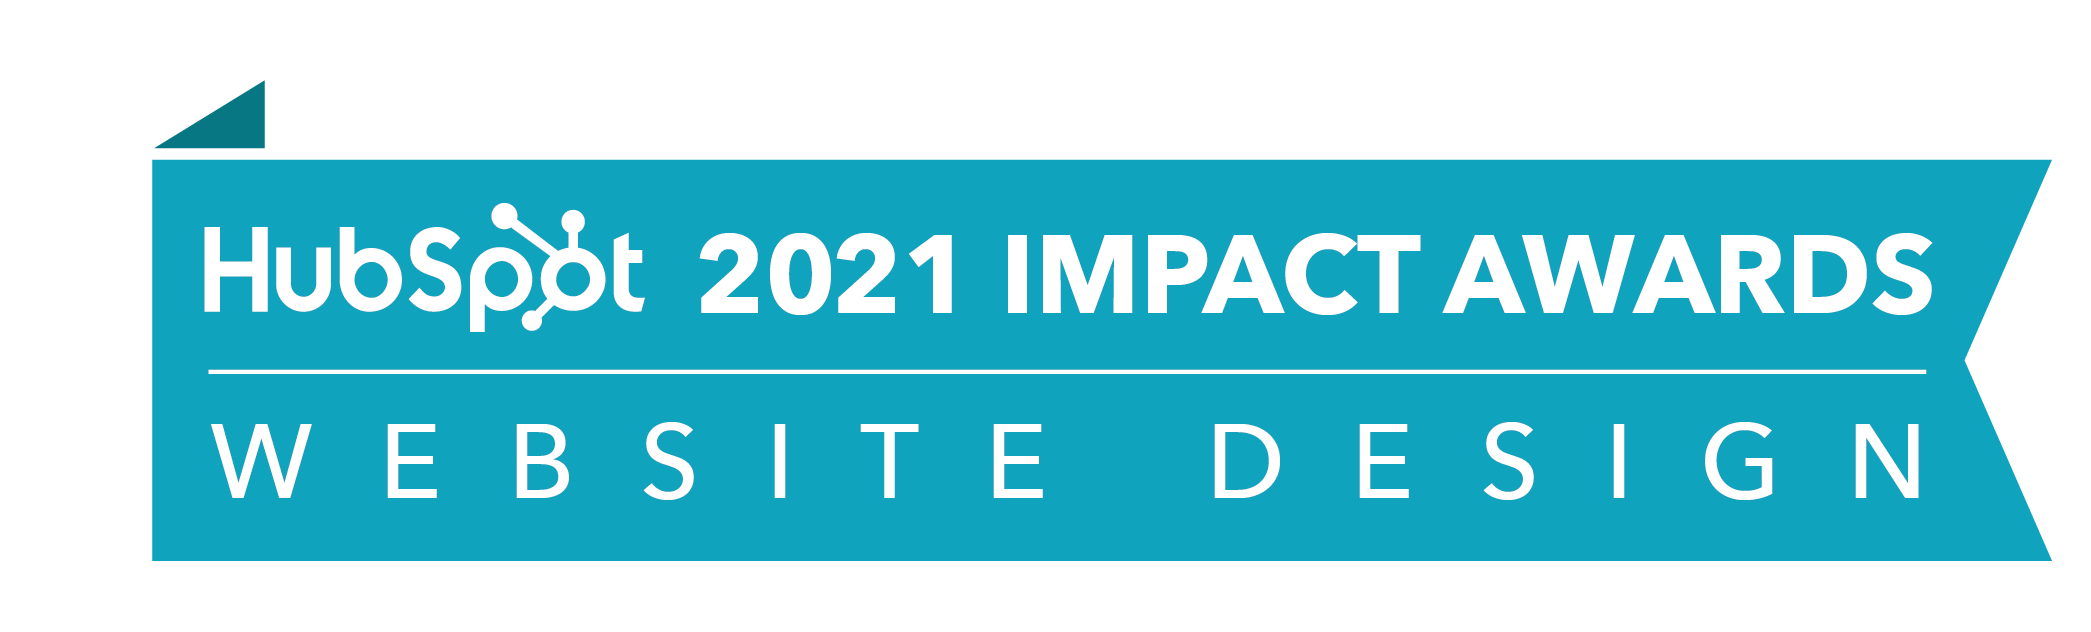 HubSpot_ImpactAwards_2021_WebsiteDesign2